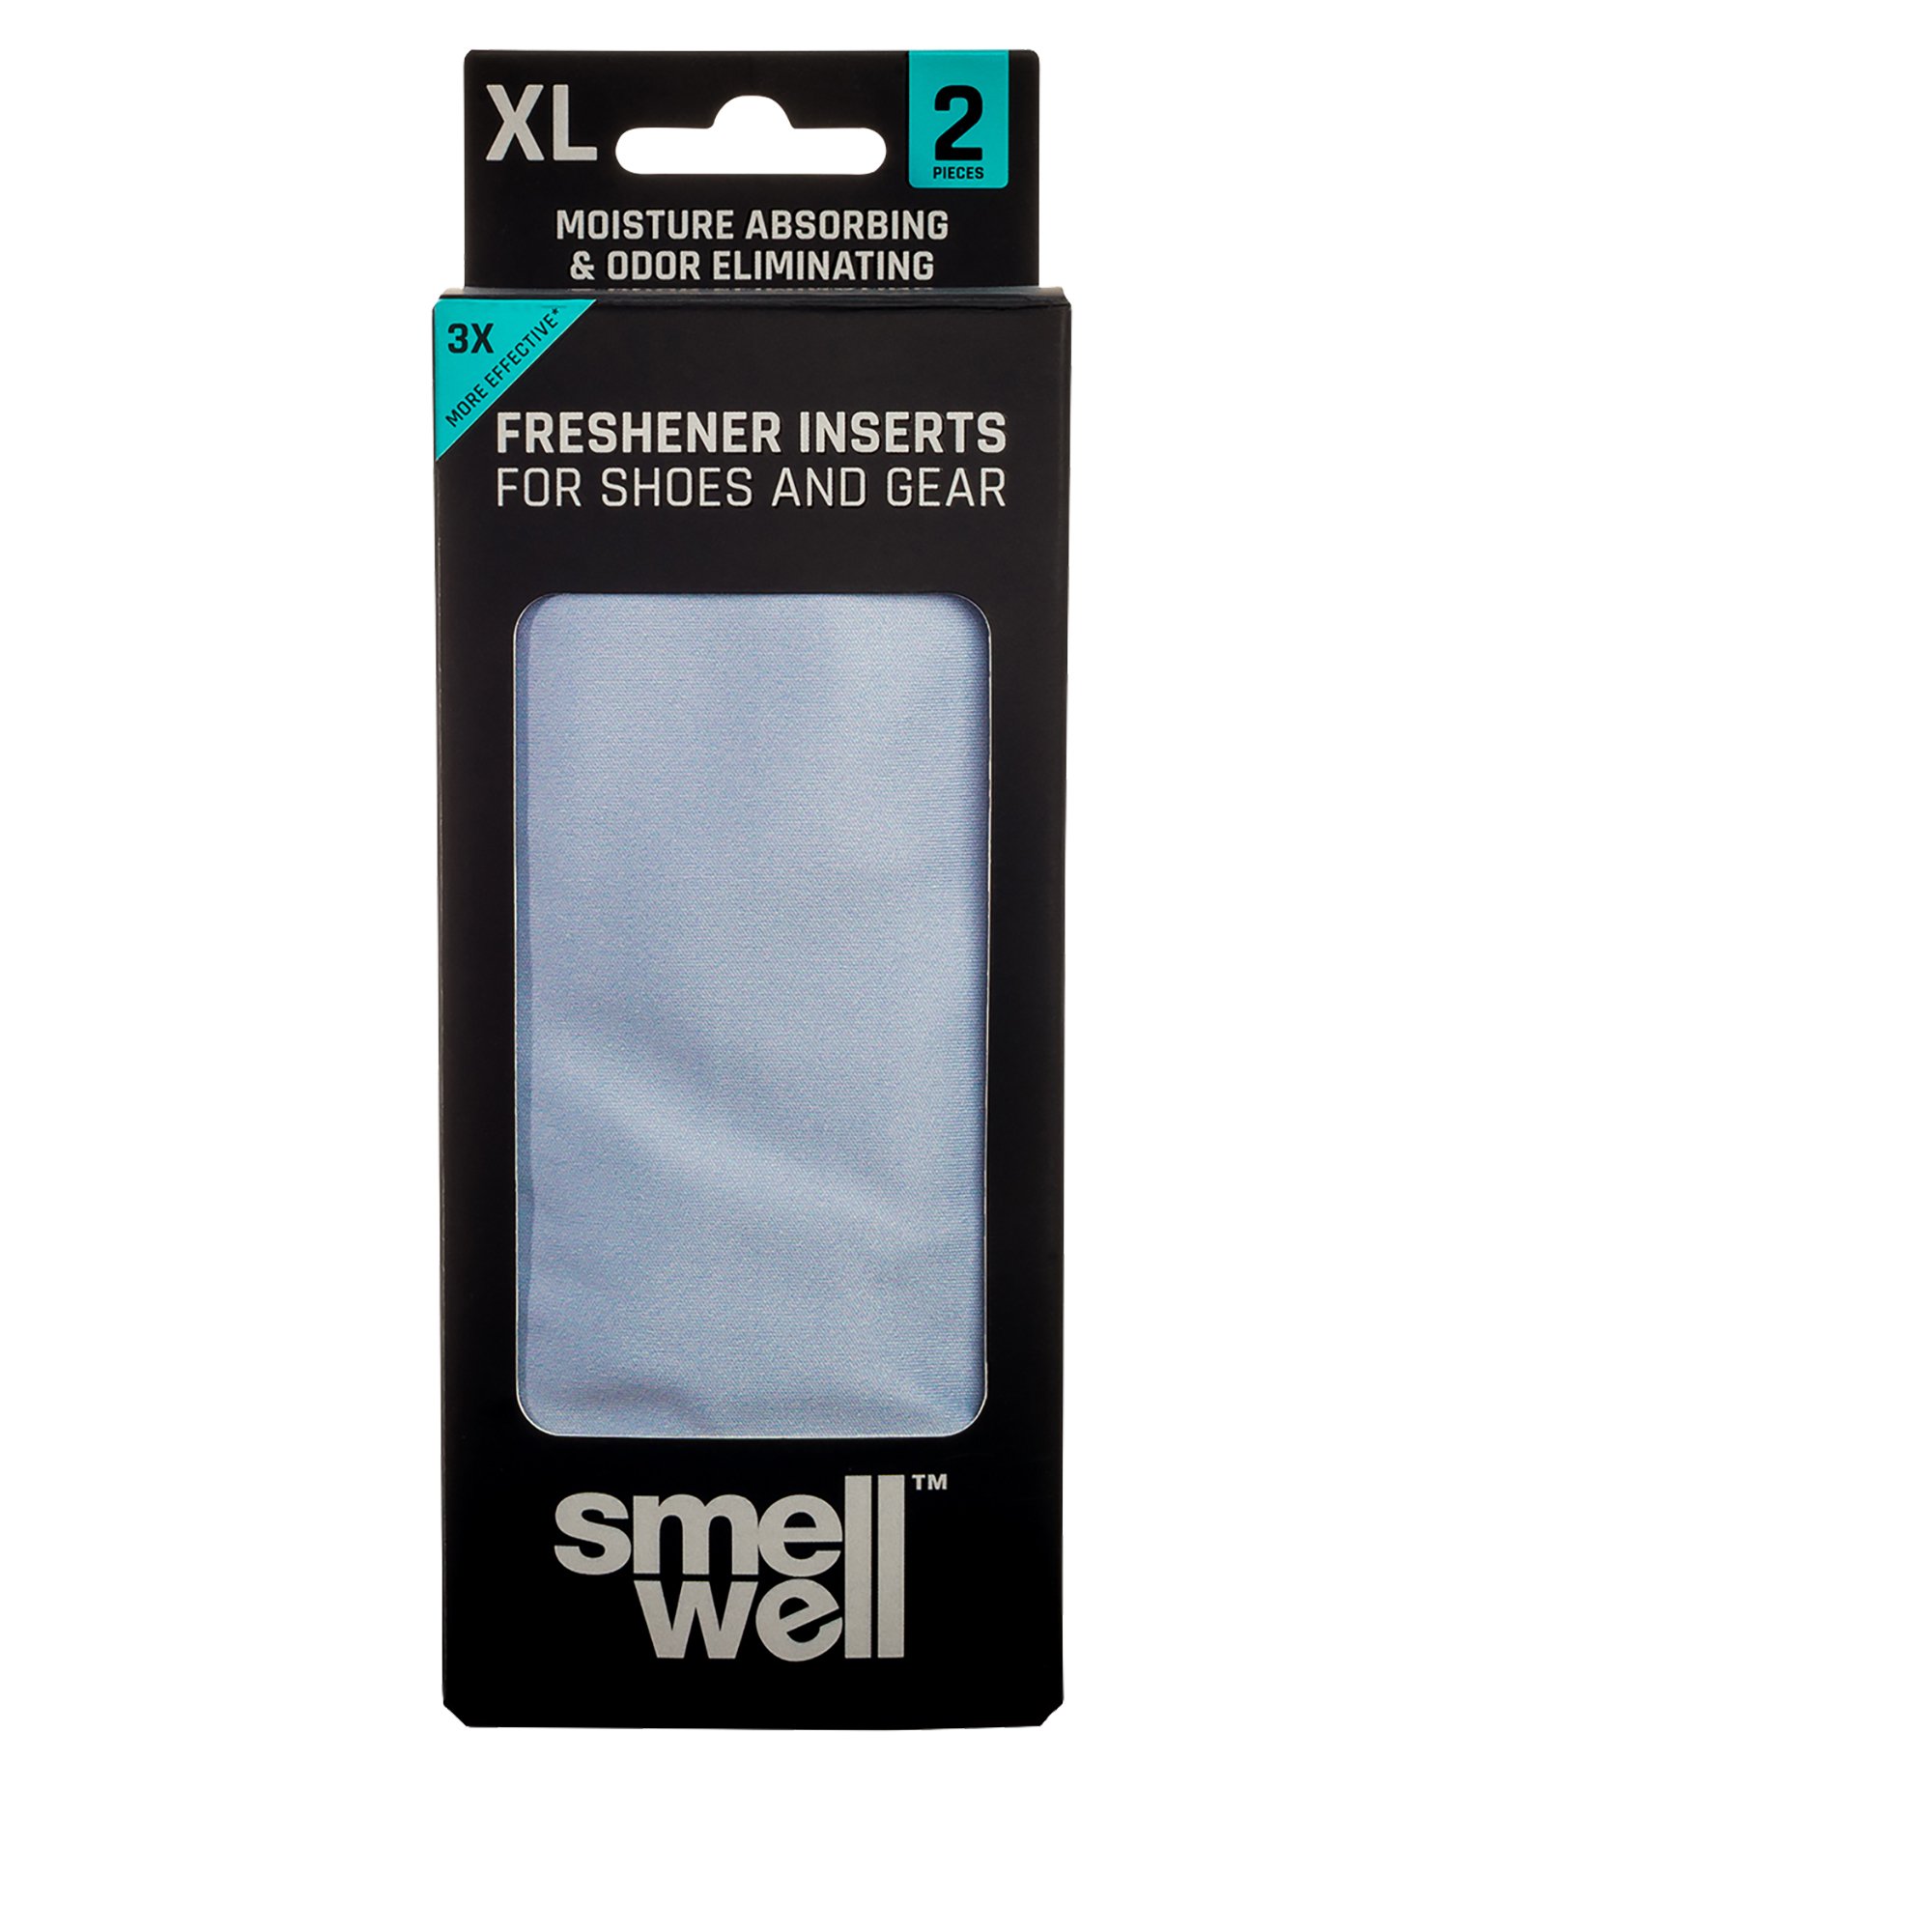 SmellWell Active XL Schuherfrischer Schuhkissen